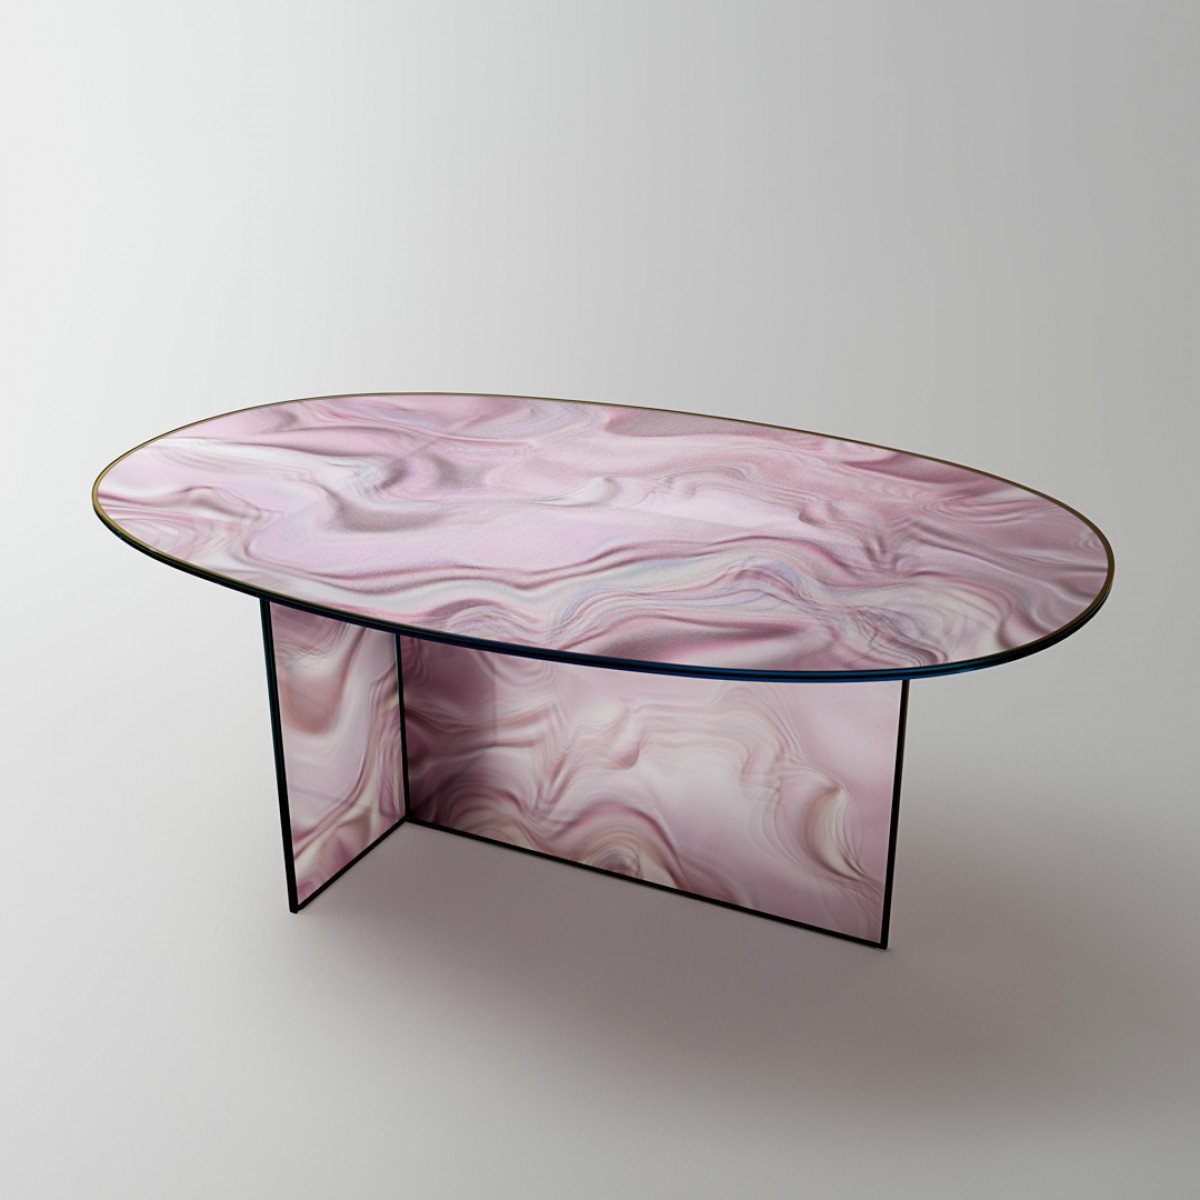 LIQUEFY Coffee Tables by Patricia Urquiola for Glas Italia